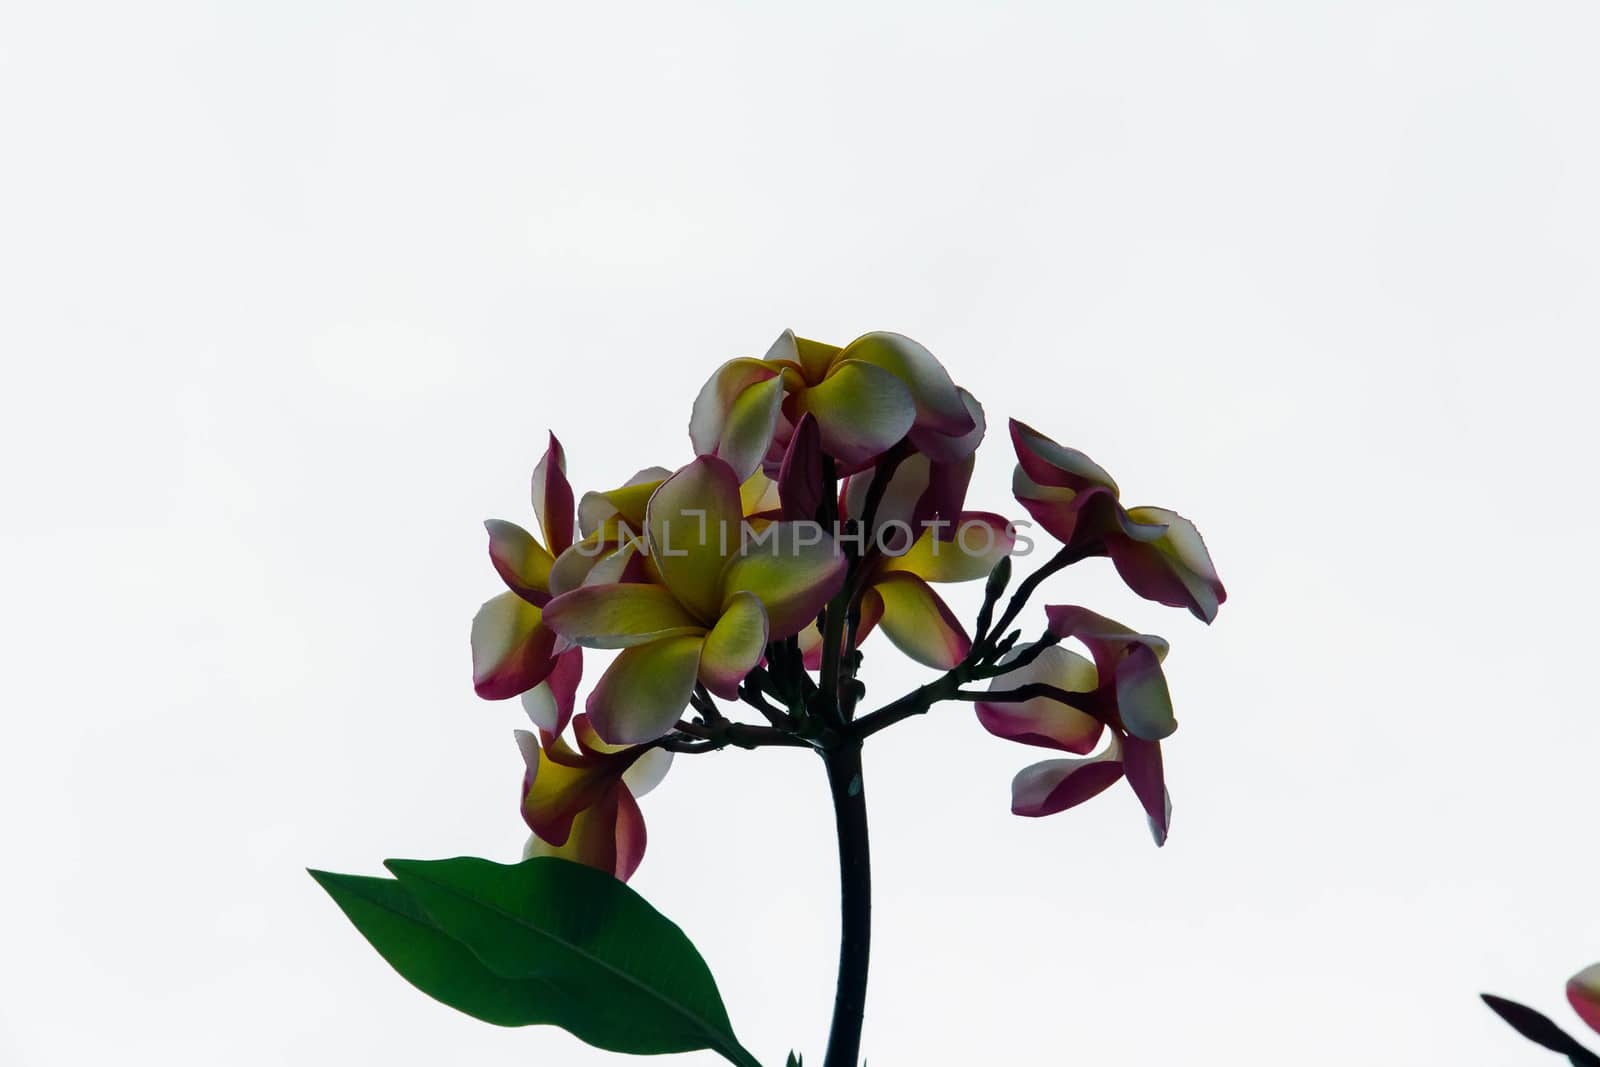 Frangipani flowers background blurred